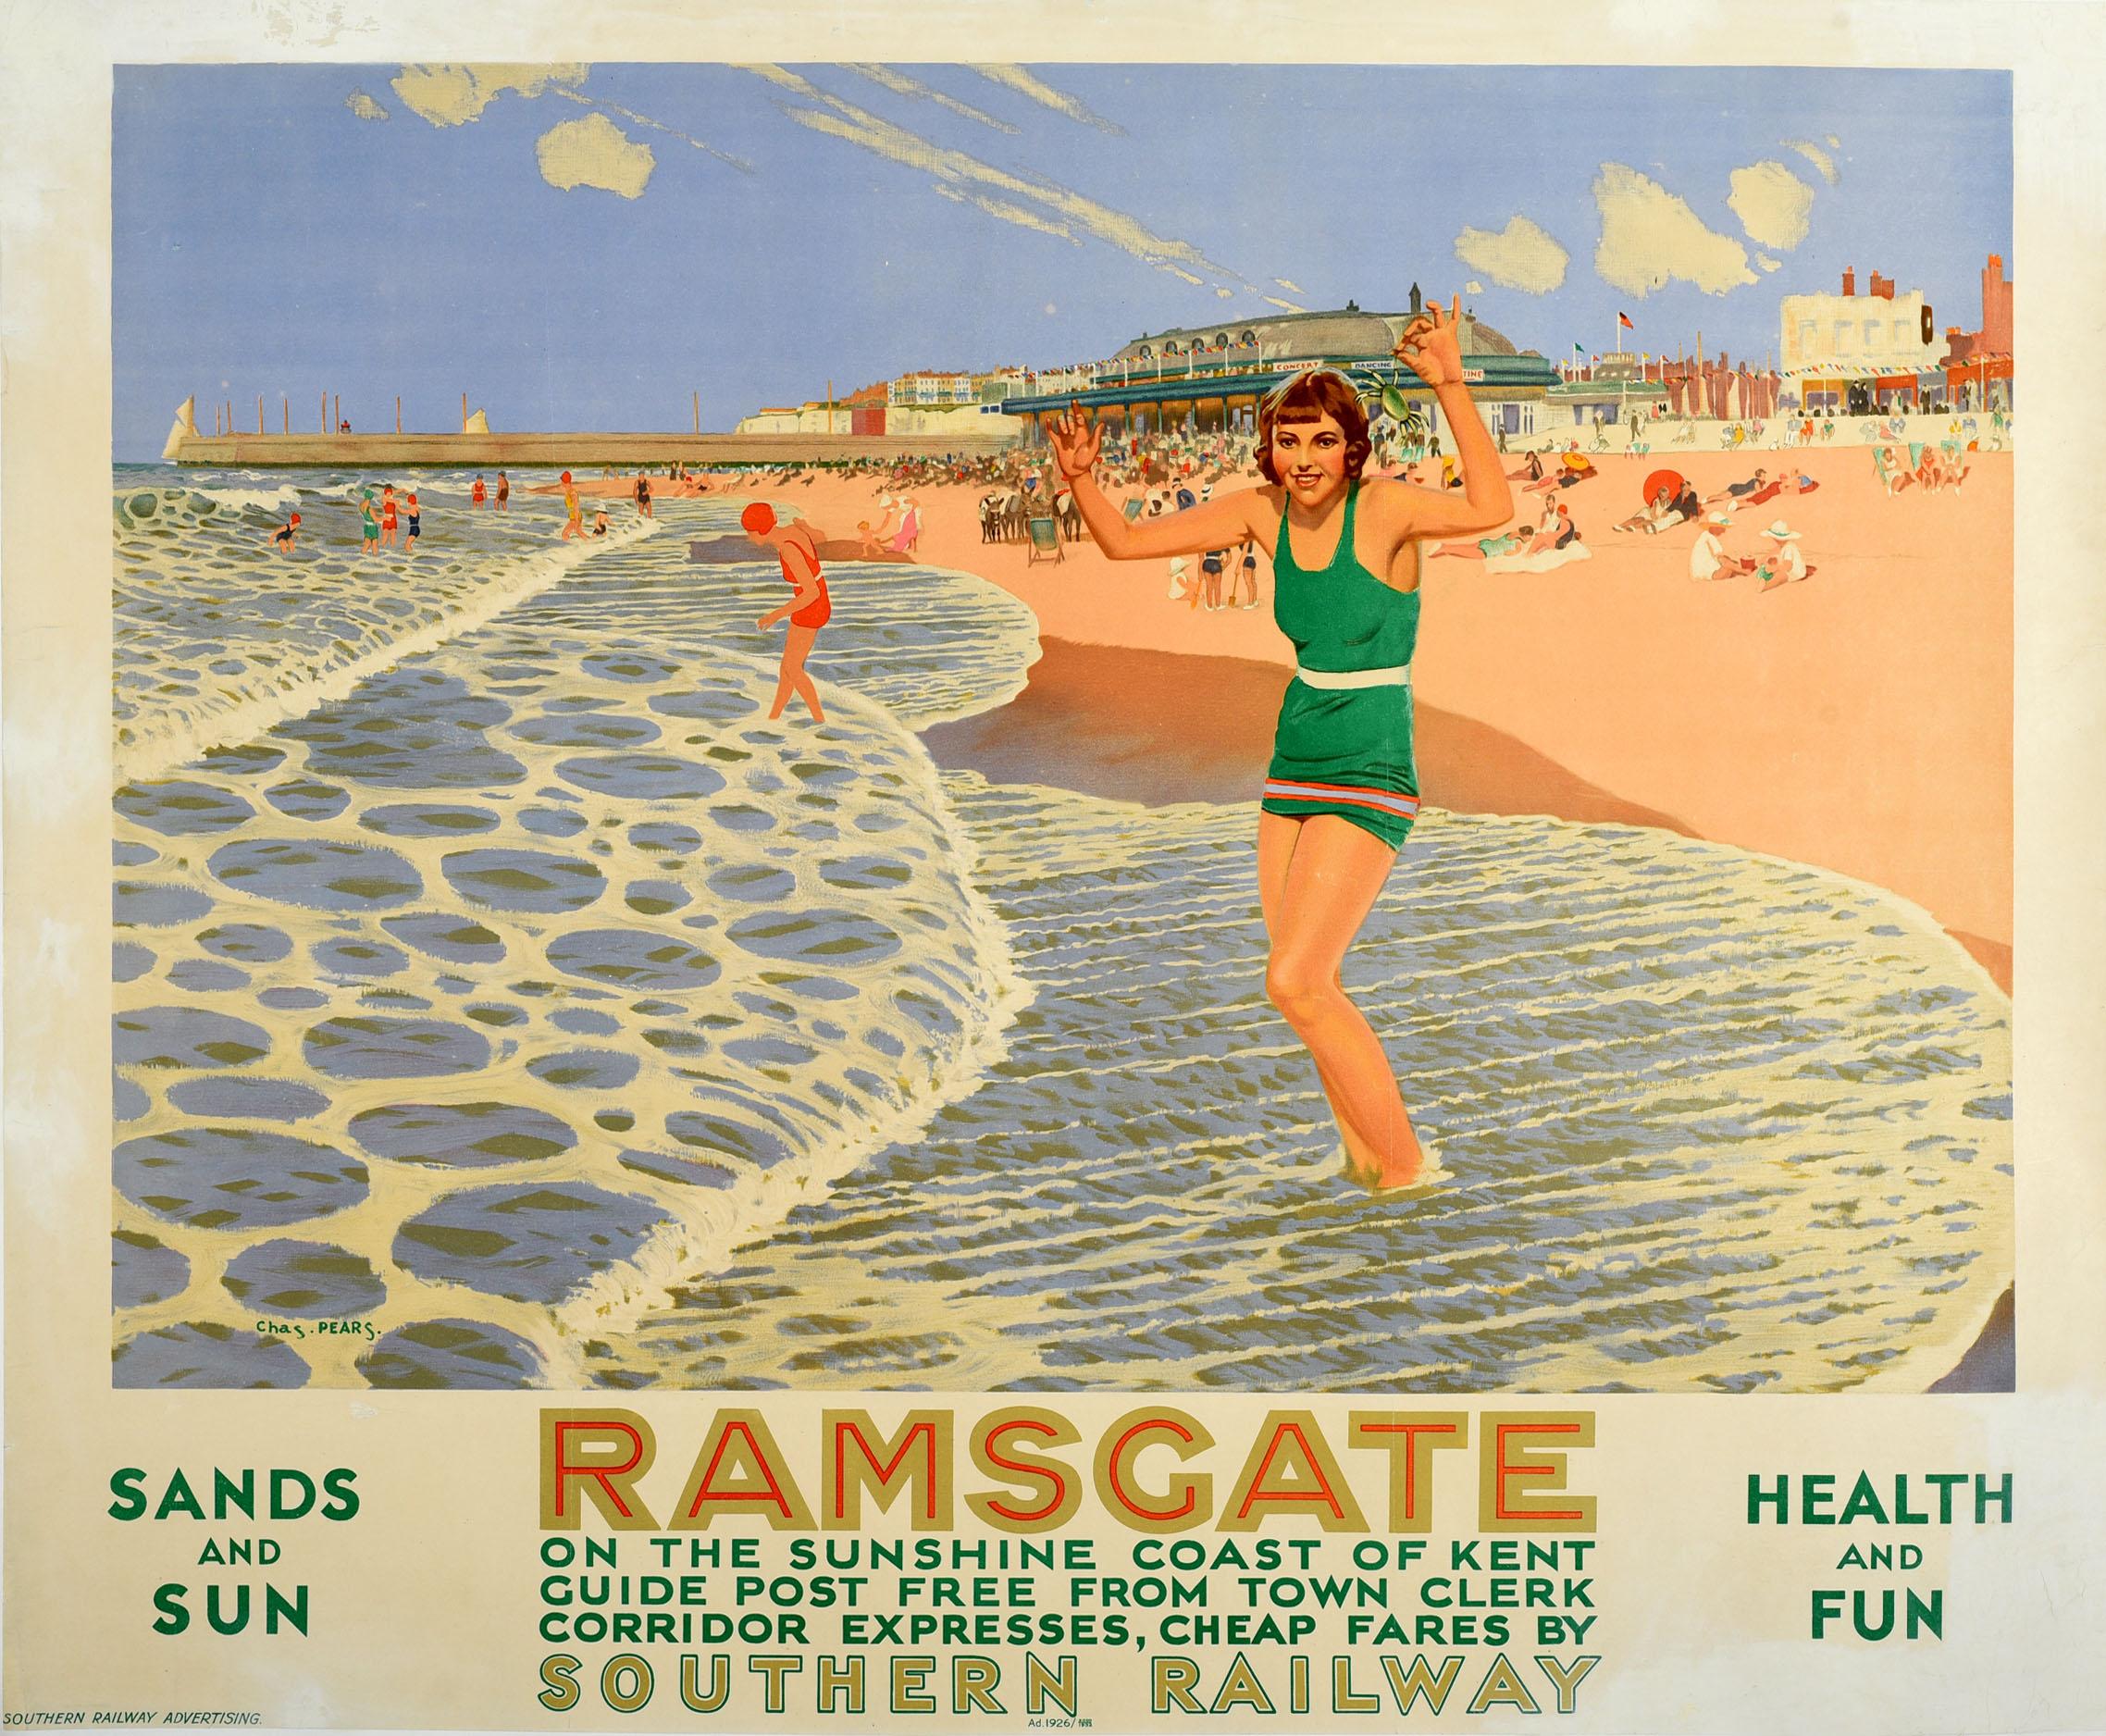 Charles Pears Print - Original Vintage Railway Poster Ramsgate Main Sands Sun Health Fun Coast Travel